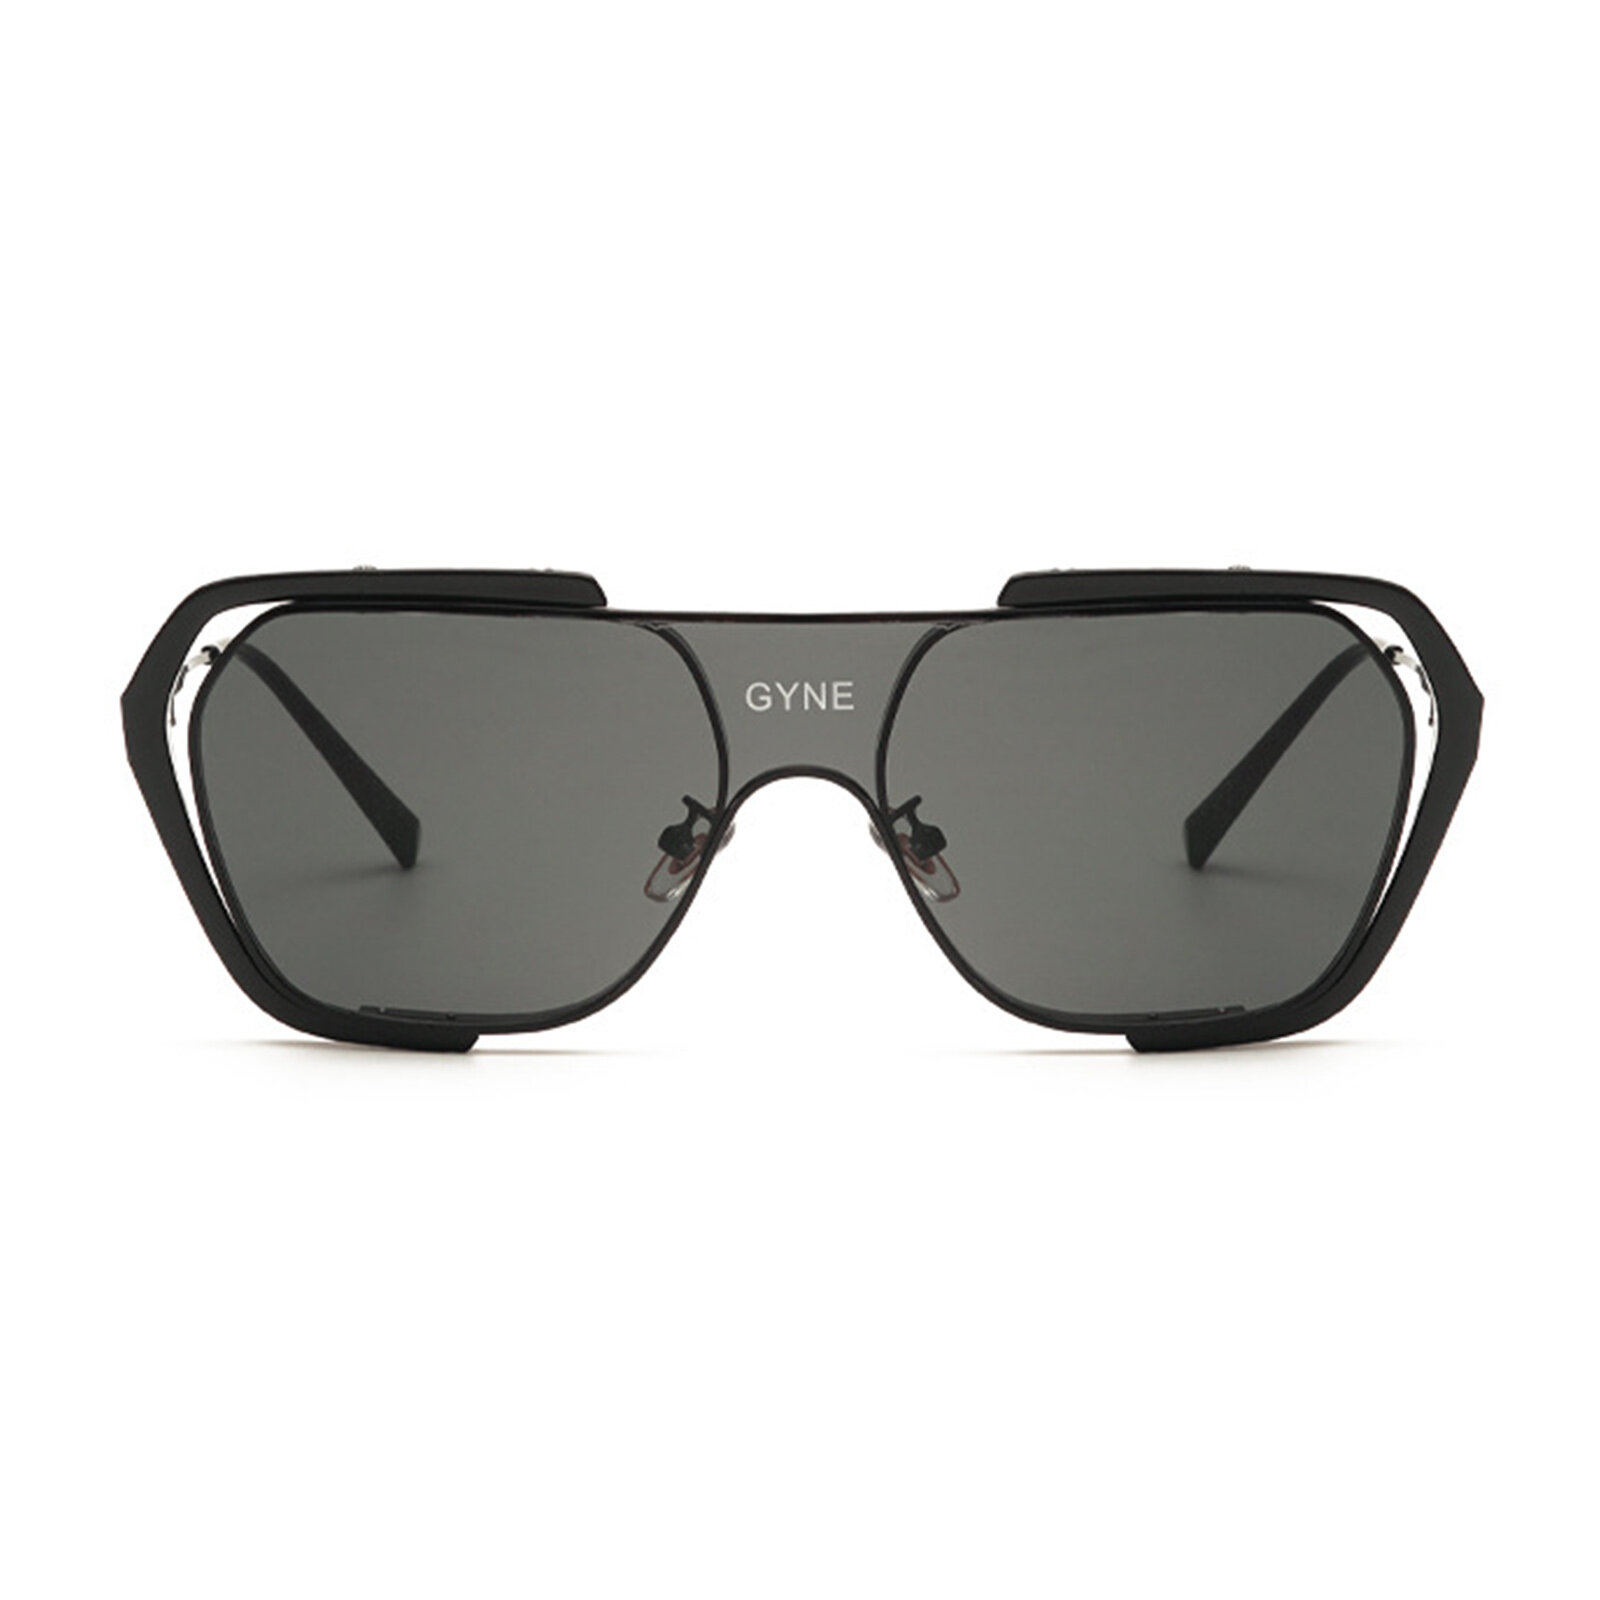 

Jassy Men UV Protection Driving Sunglasses Outdoor Travel Sunglasses